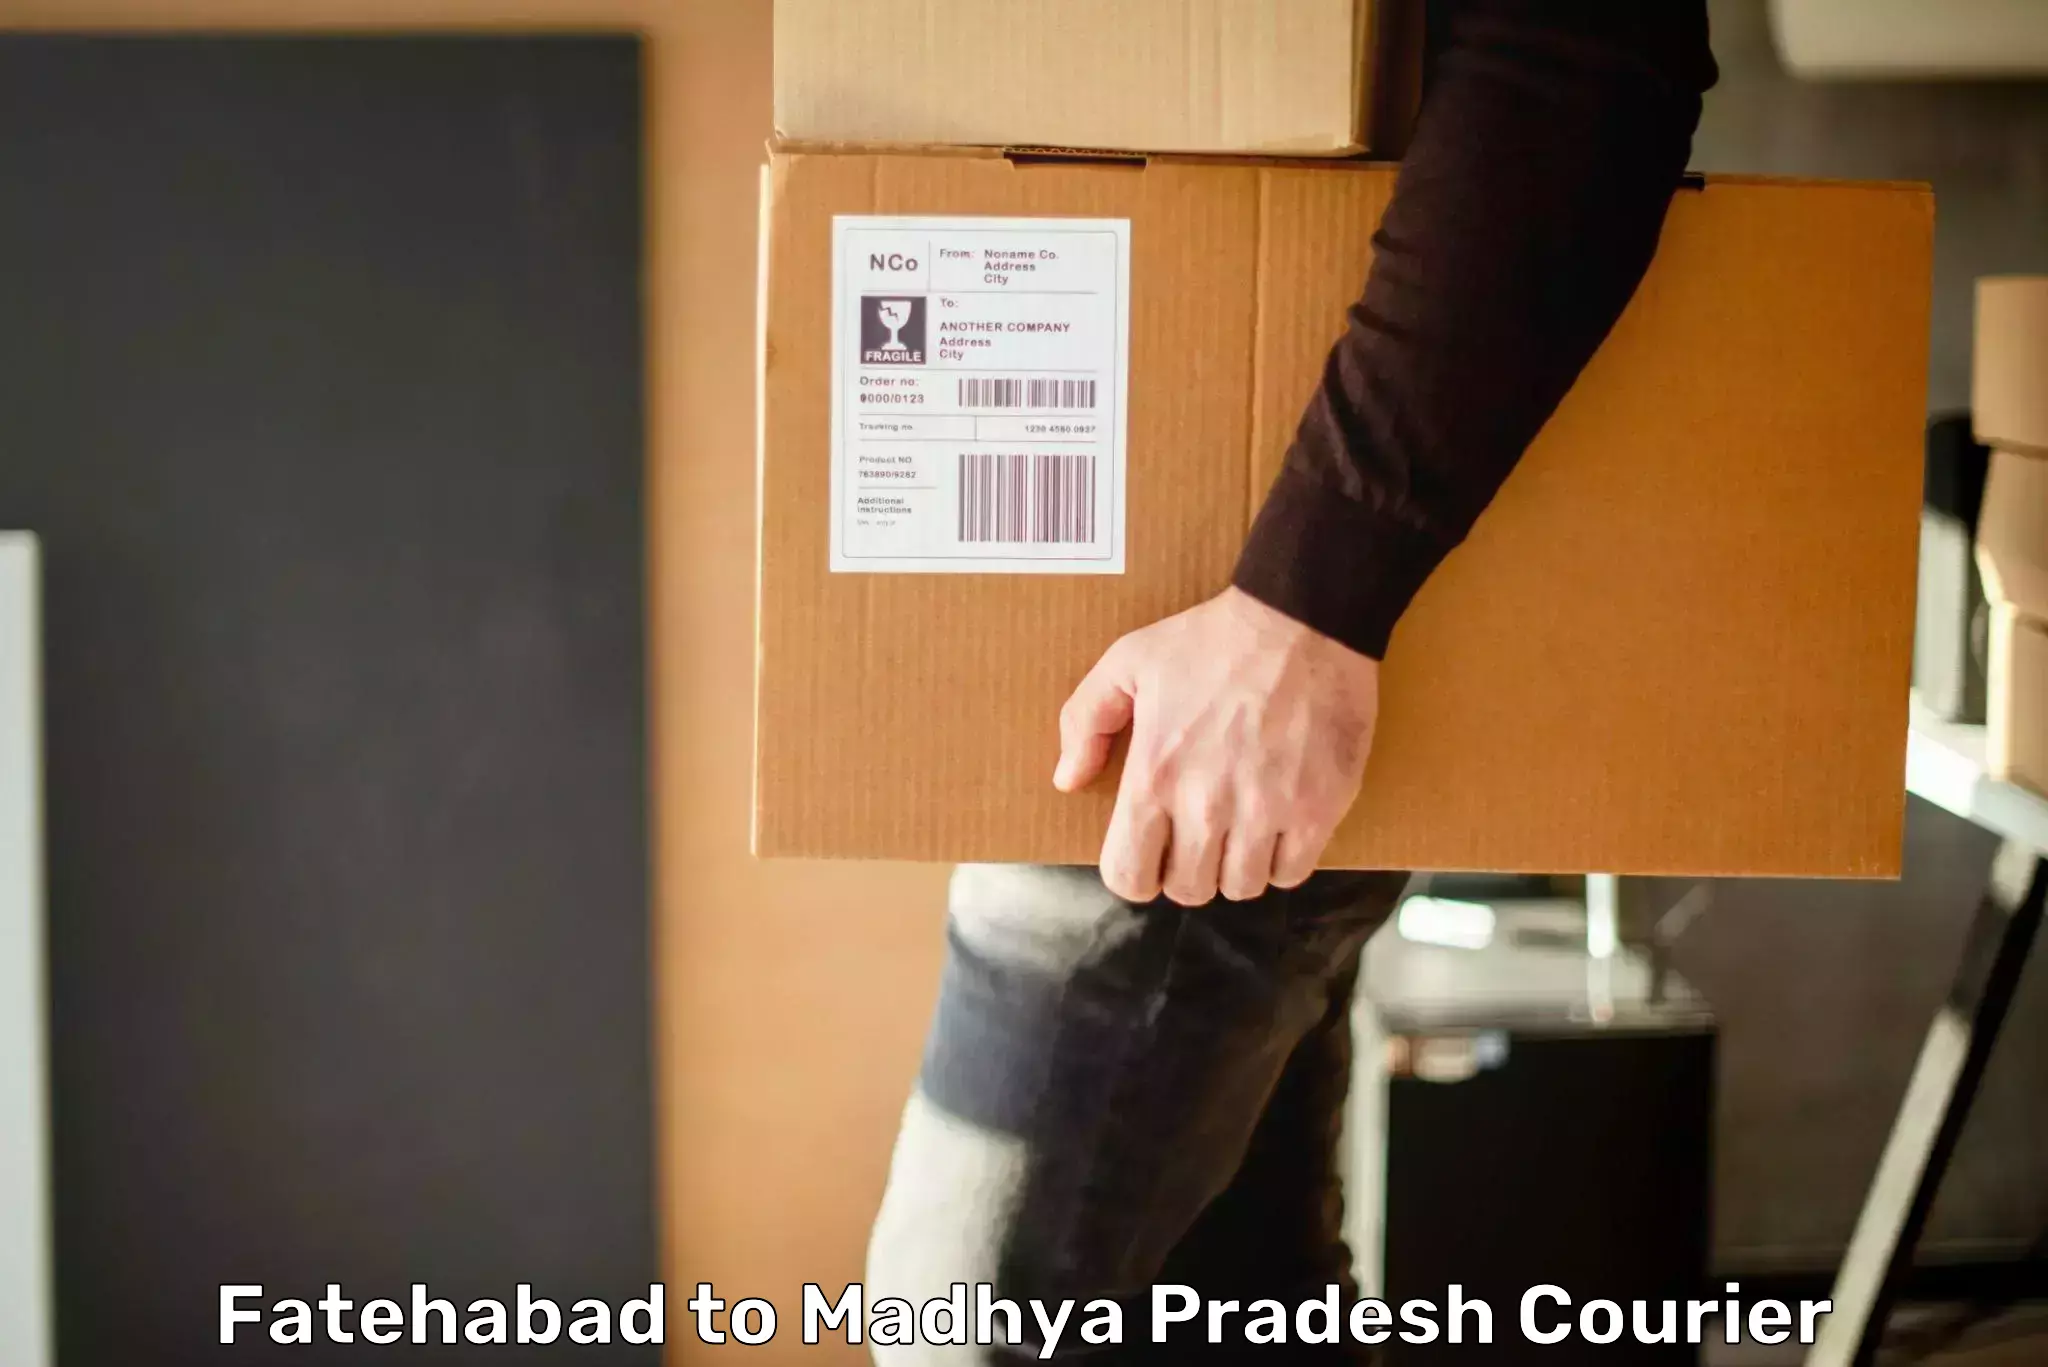 Express courier facilities Fatehabad to Ashoknagar